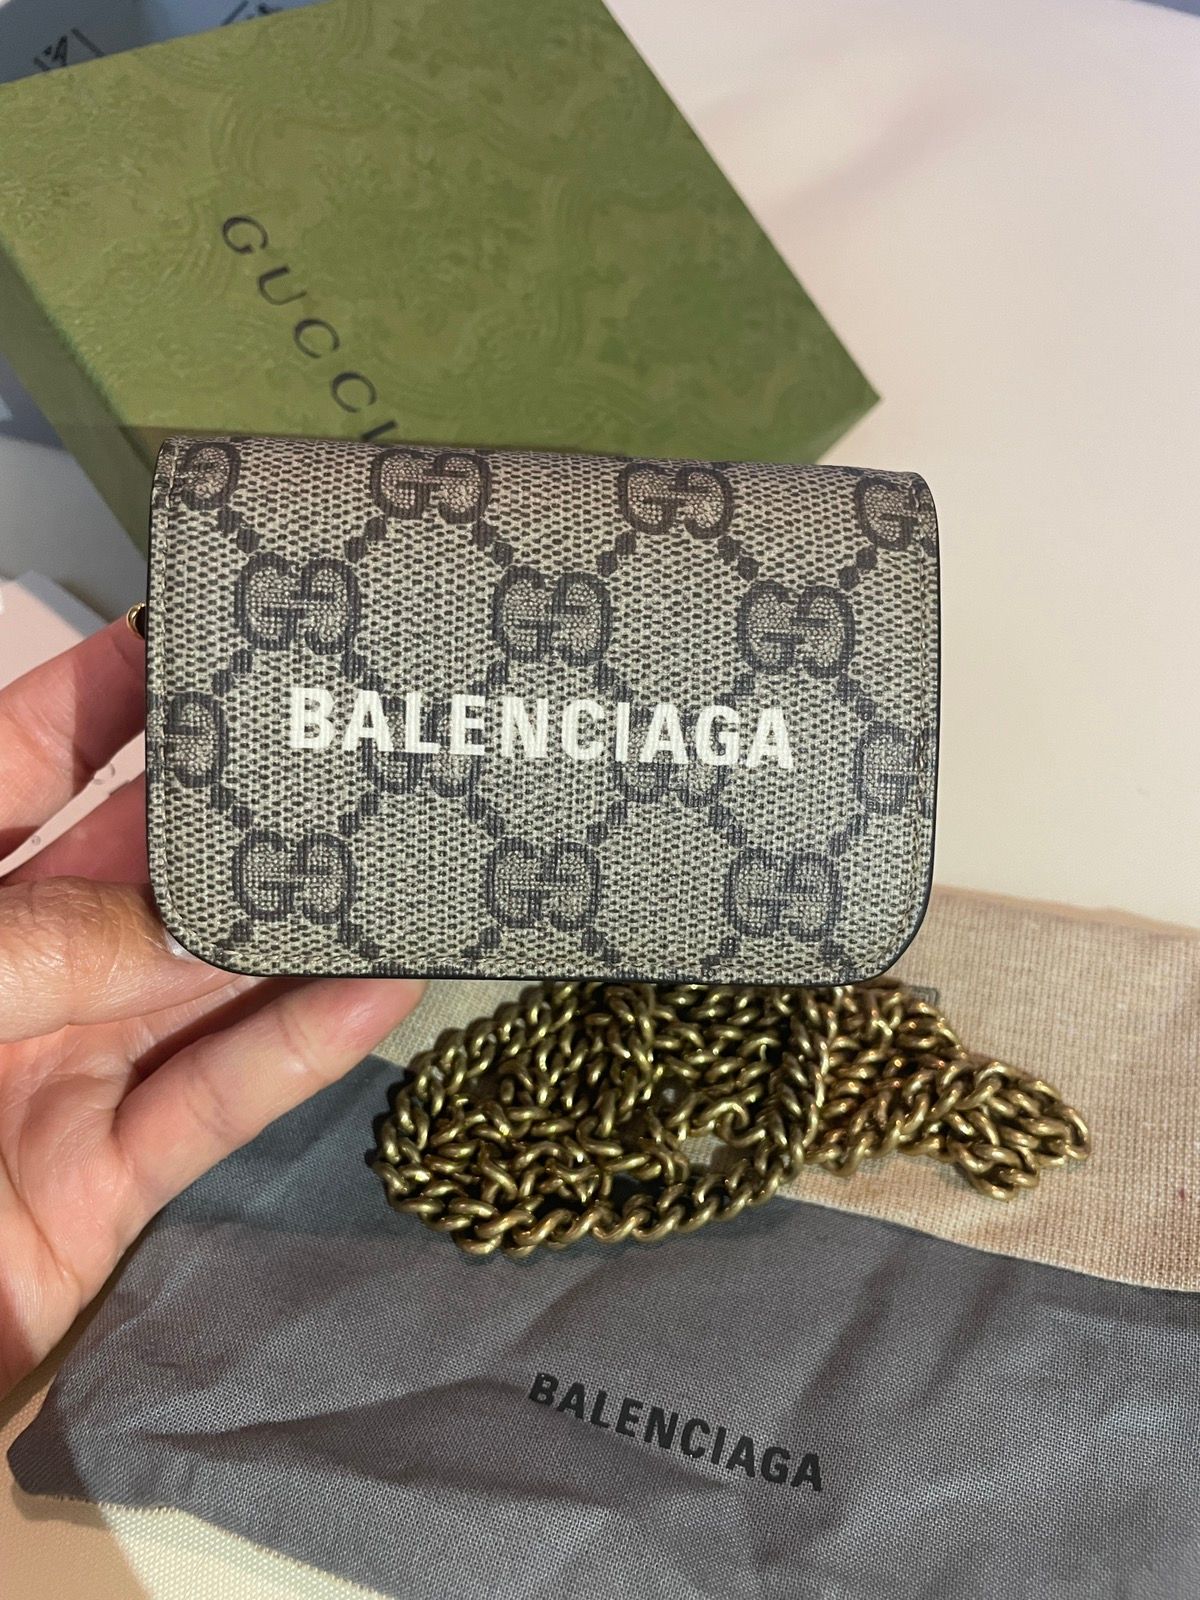 Gucci Gucci x Balenciaga Hacker Project Wallet on Chain